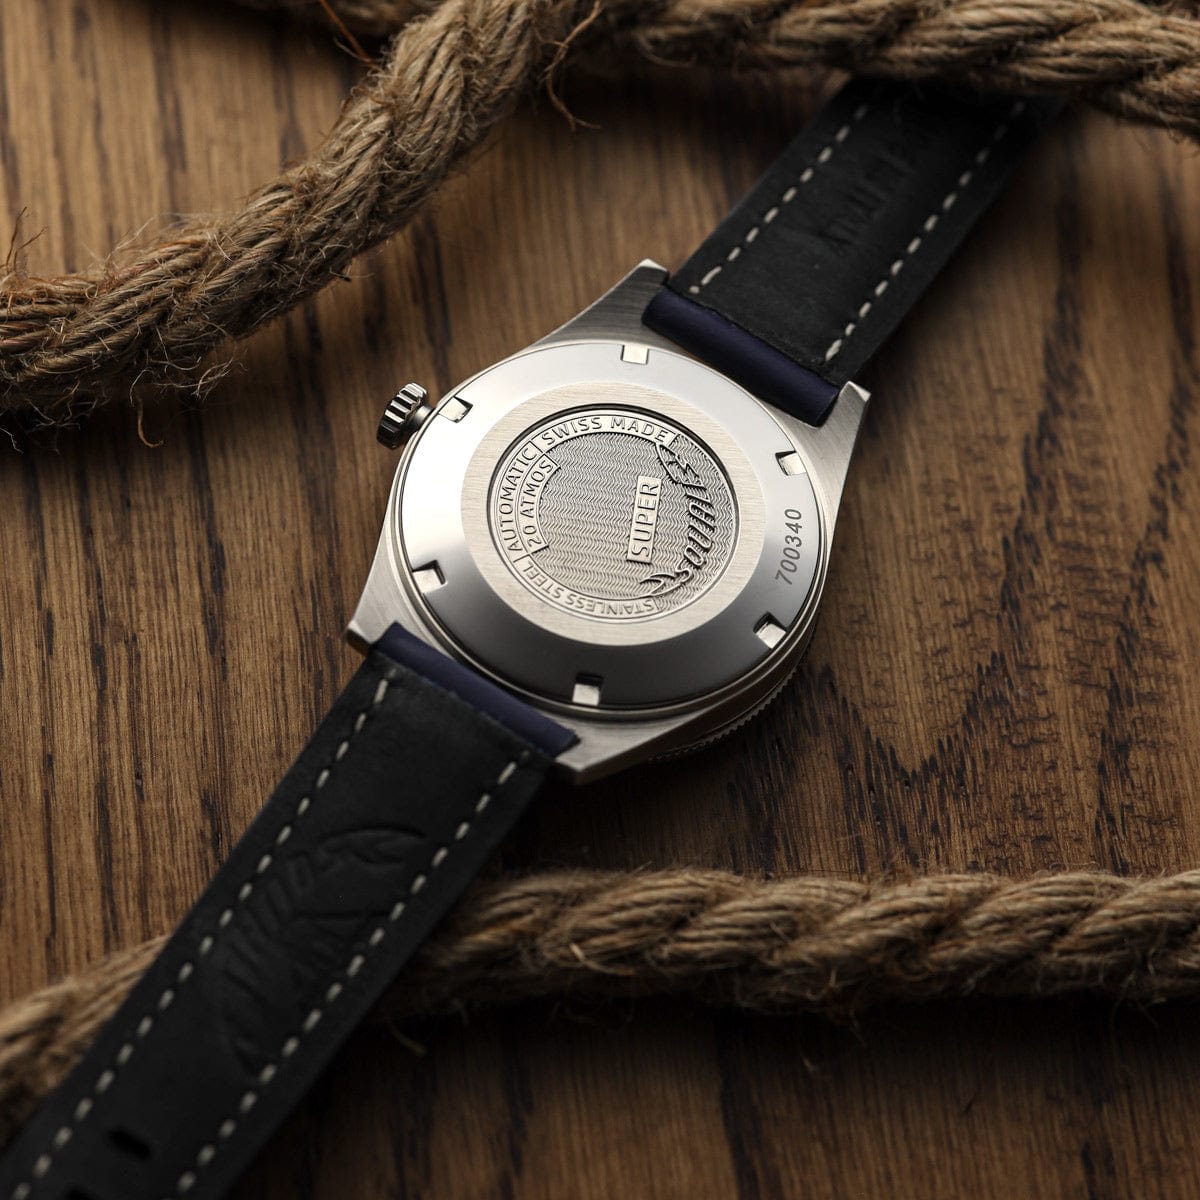 Super Squale Arabic Numerals Diver's Watch - Matt Blue Dial - Rubberised Calf Leather Strap